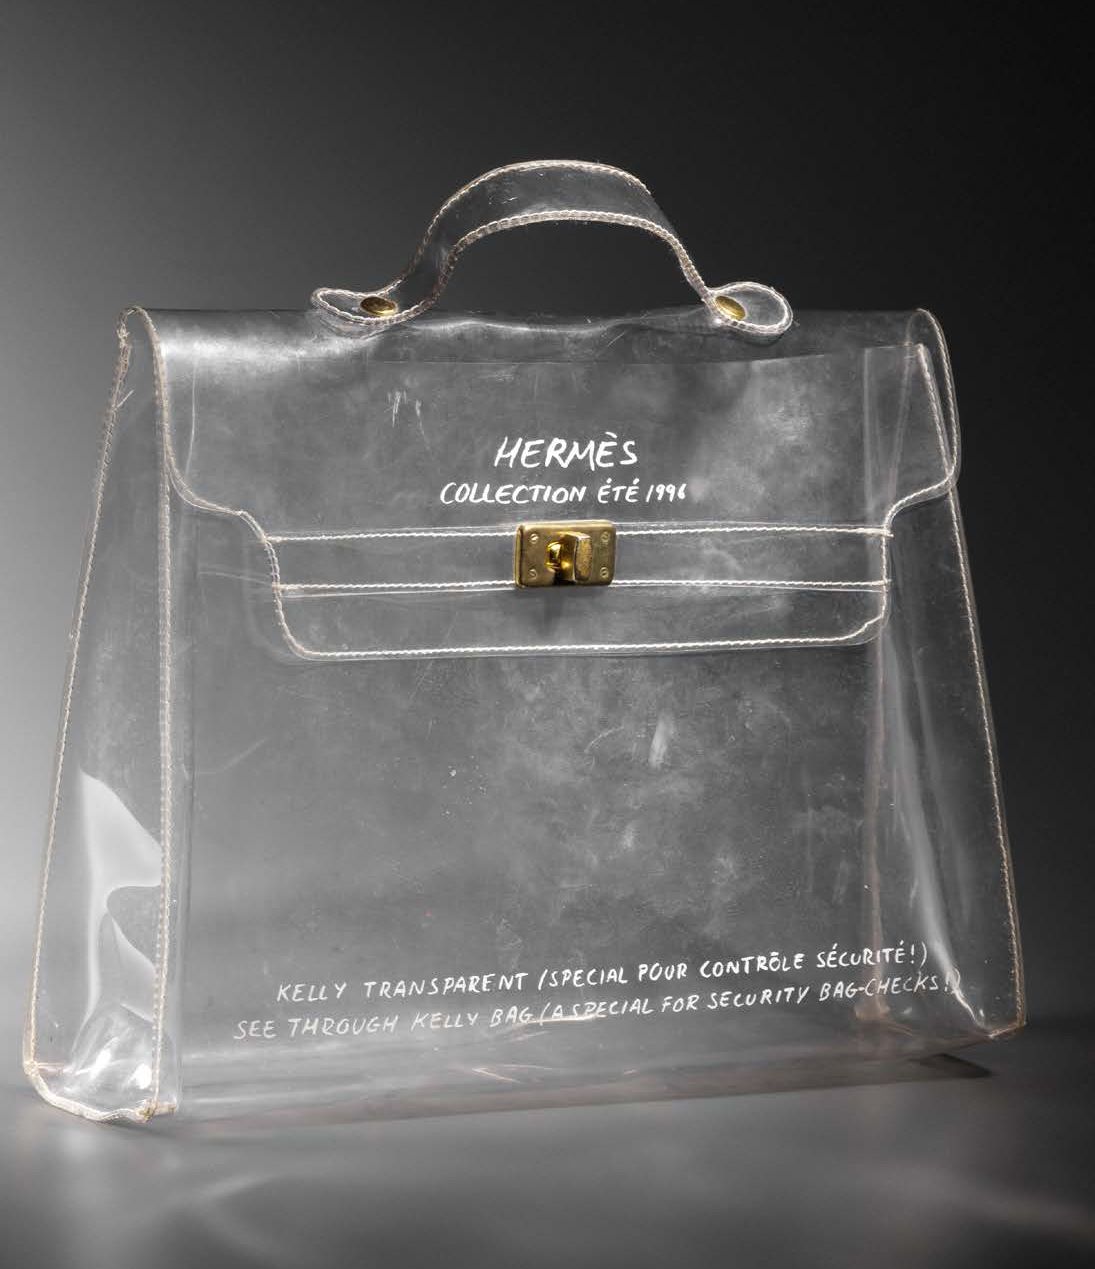 HERMÈS PARIS Kelly" bag in transparent plastic, gold-plated metal clasp
1996 col&hellip;